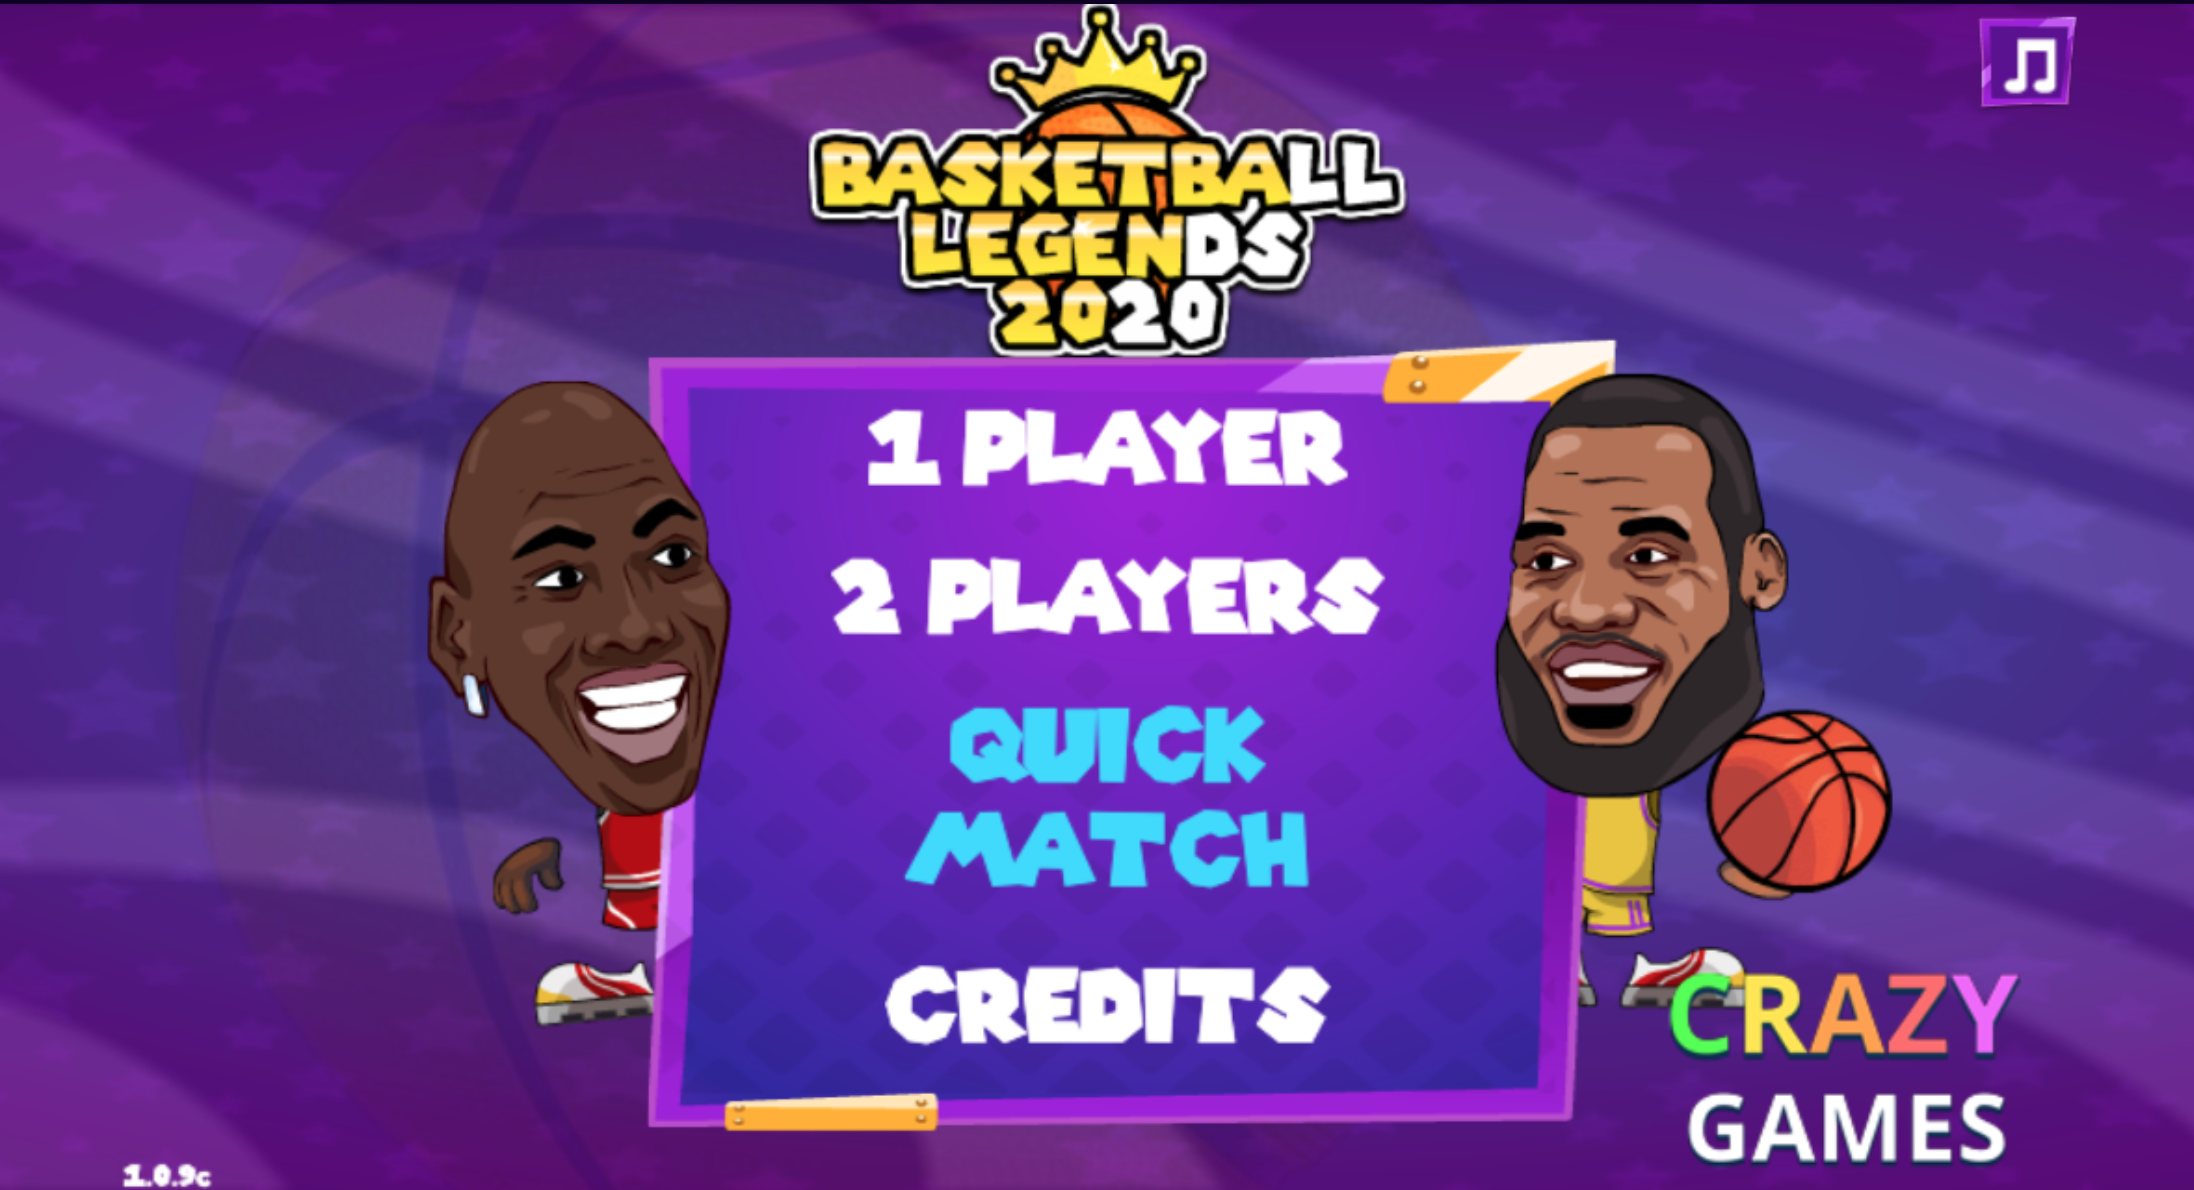 Basketball Legends 2020 screenshots image - ModDB